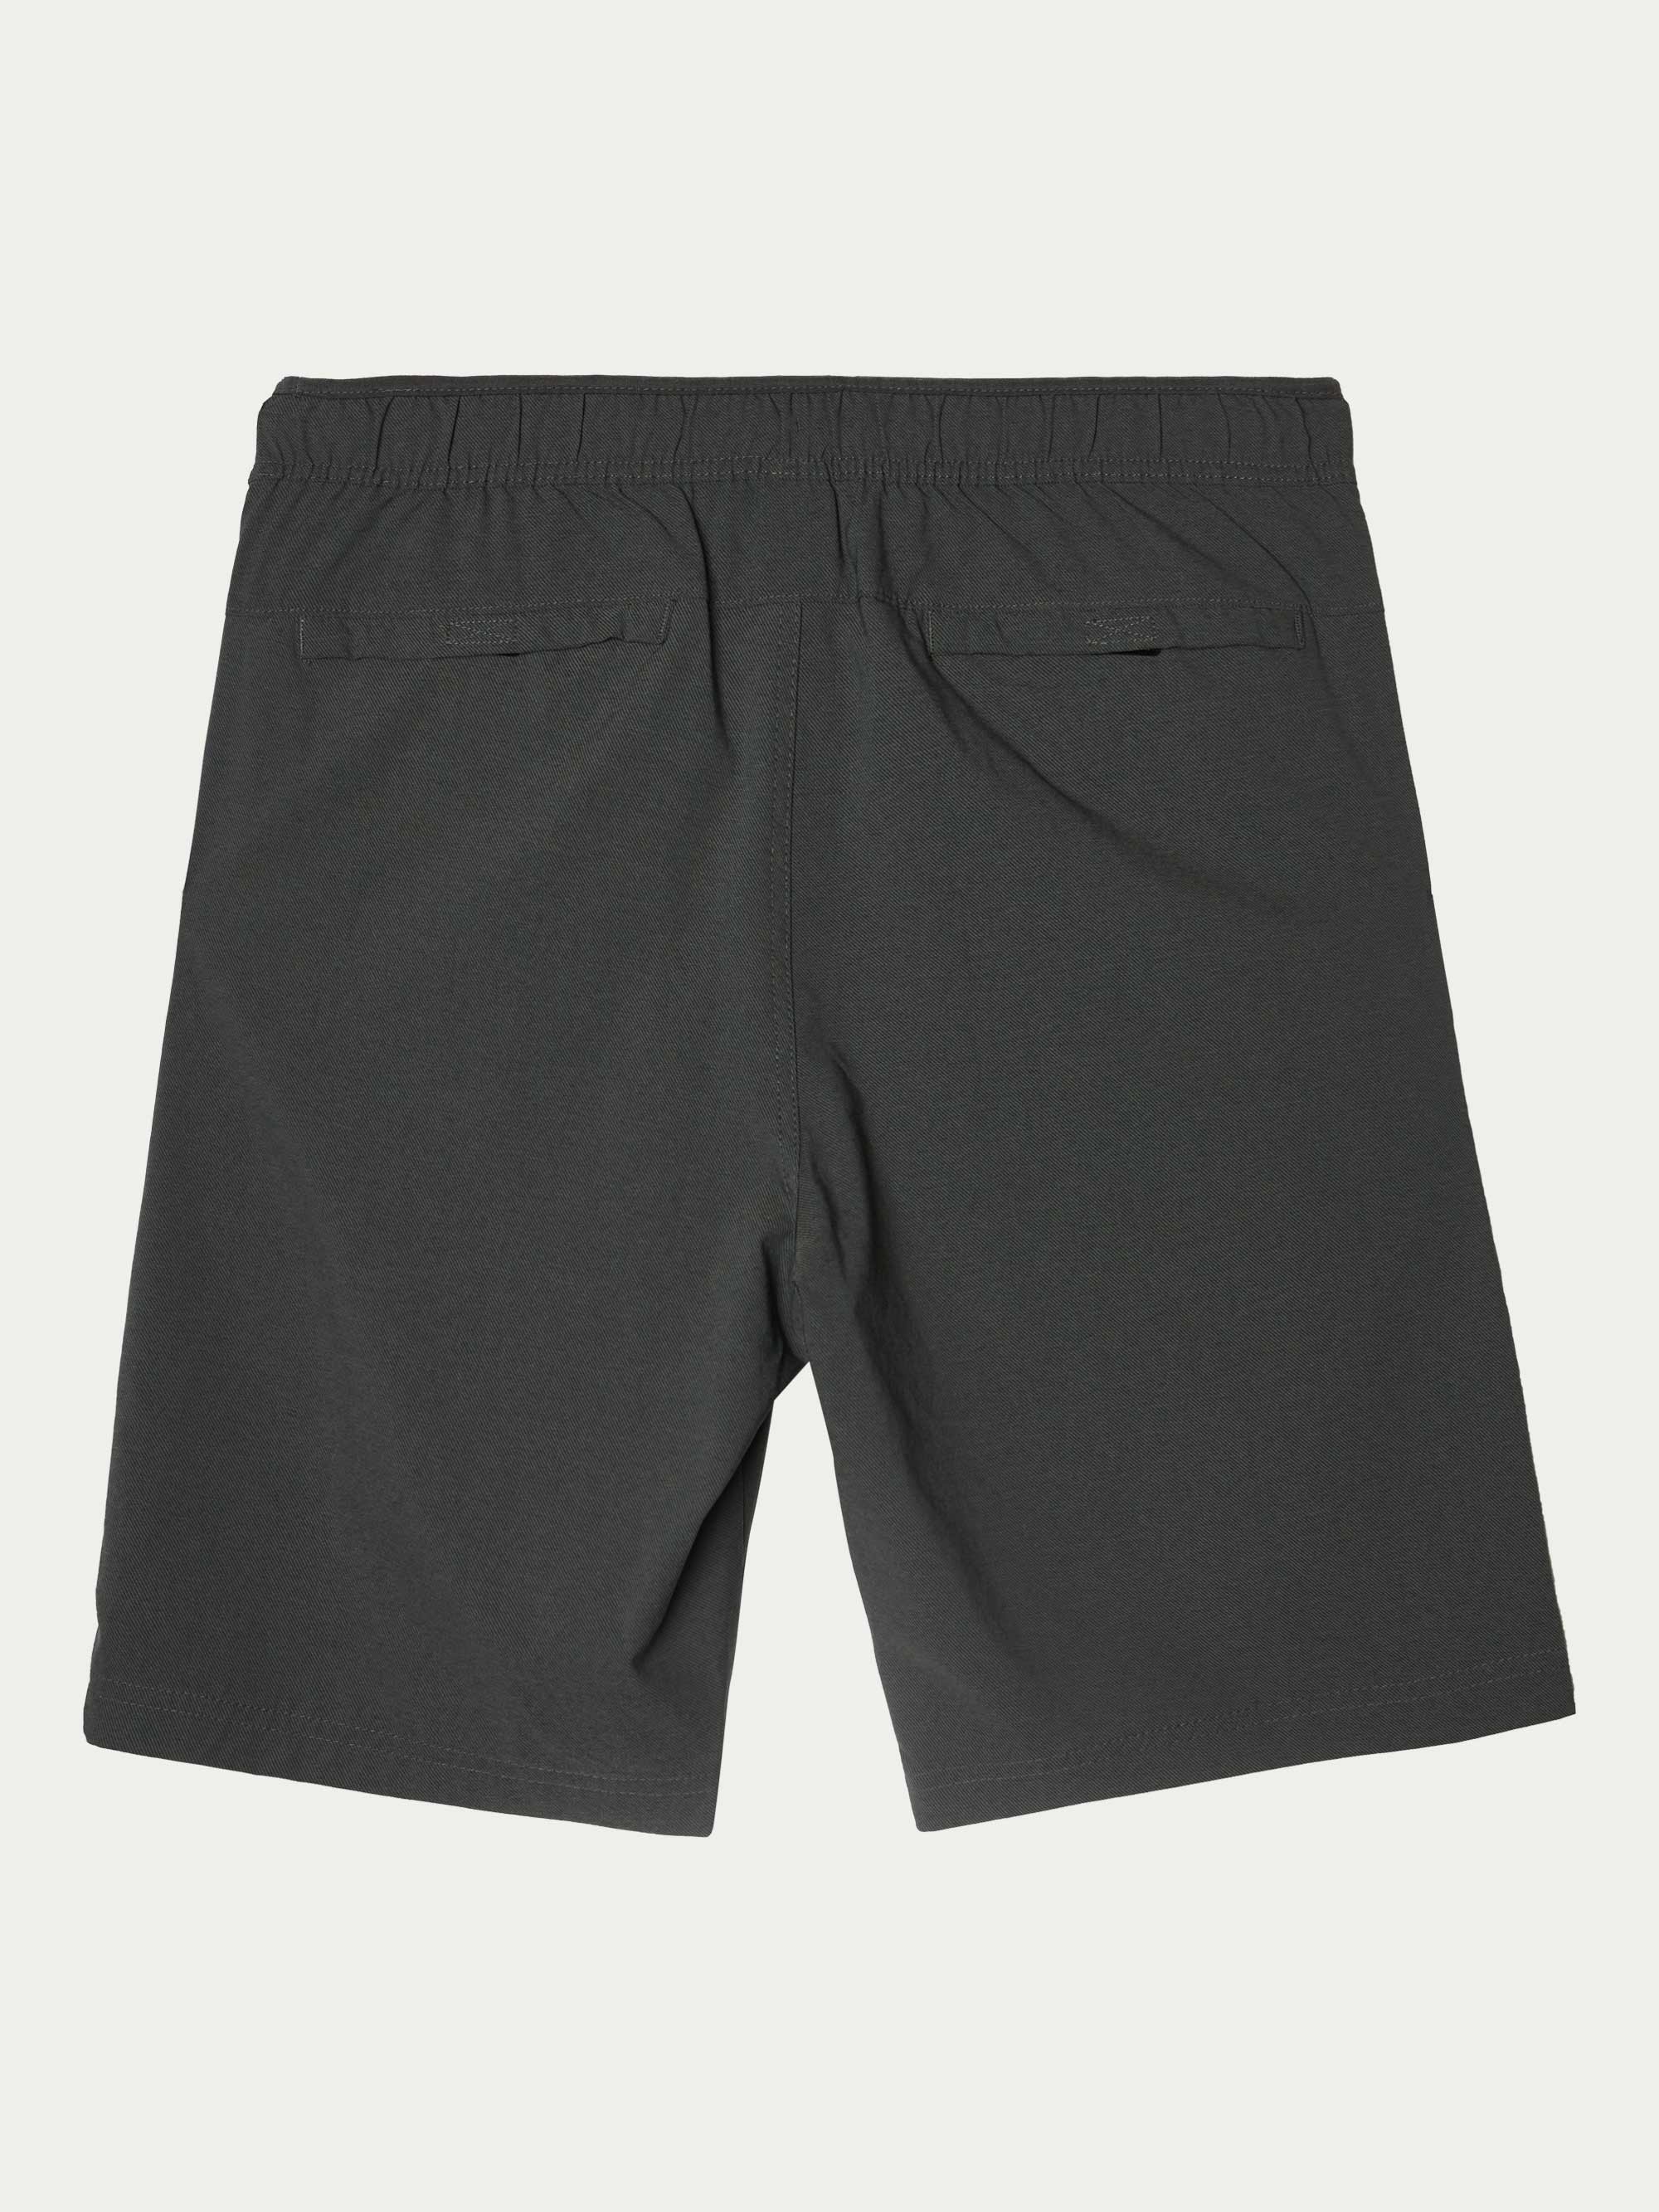 Canyon E-Waist Shorts - Dark Khaki | Voyager Goods